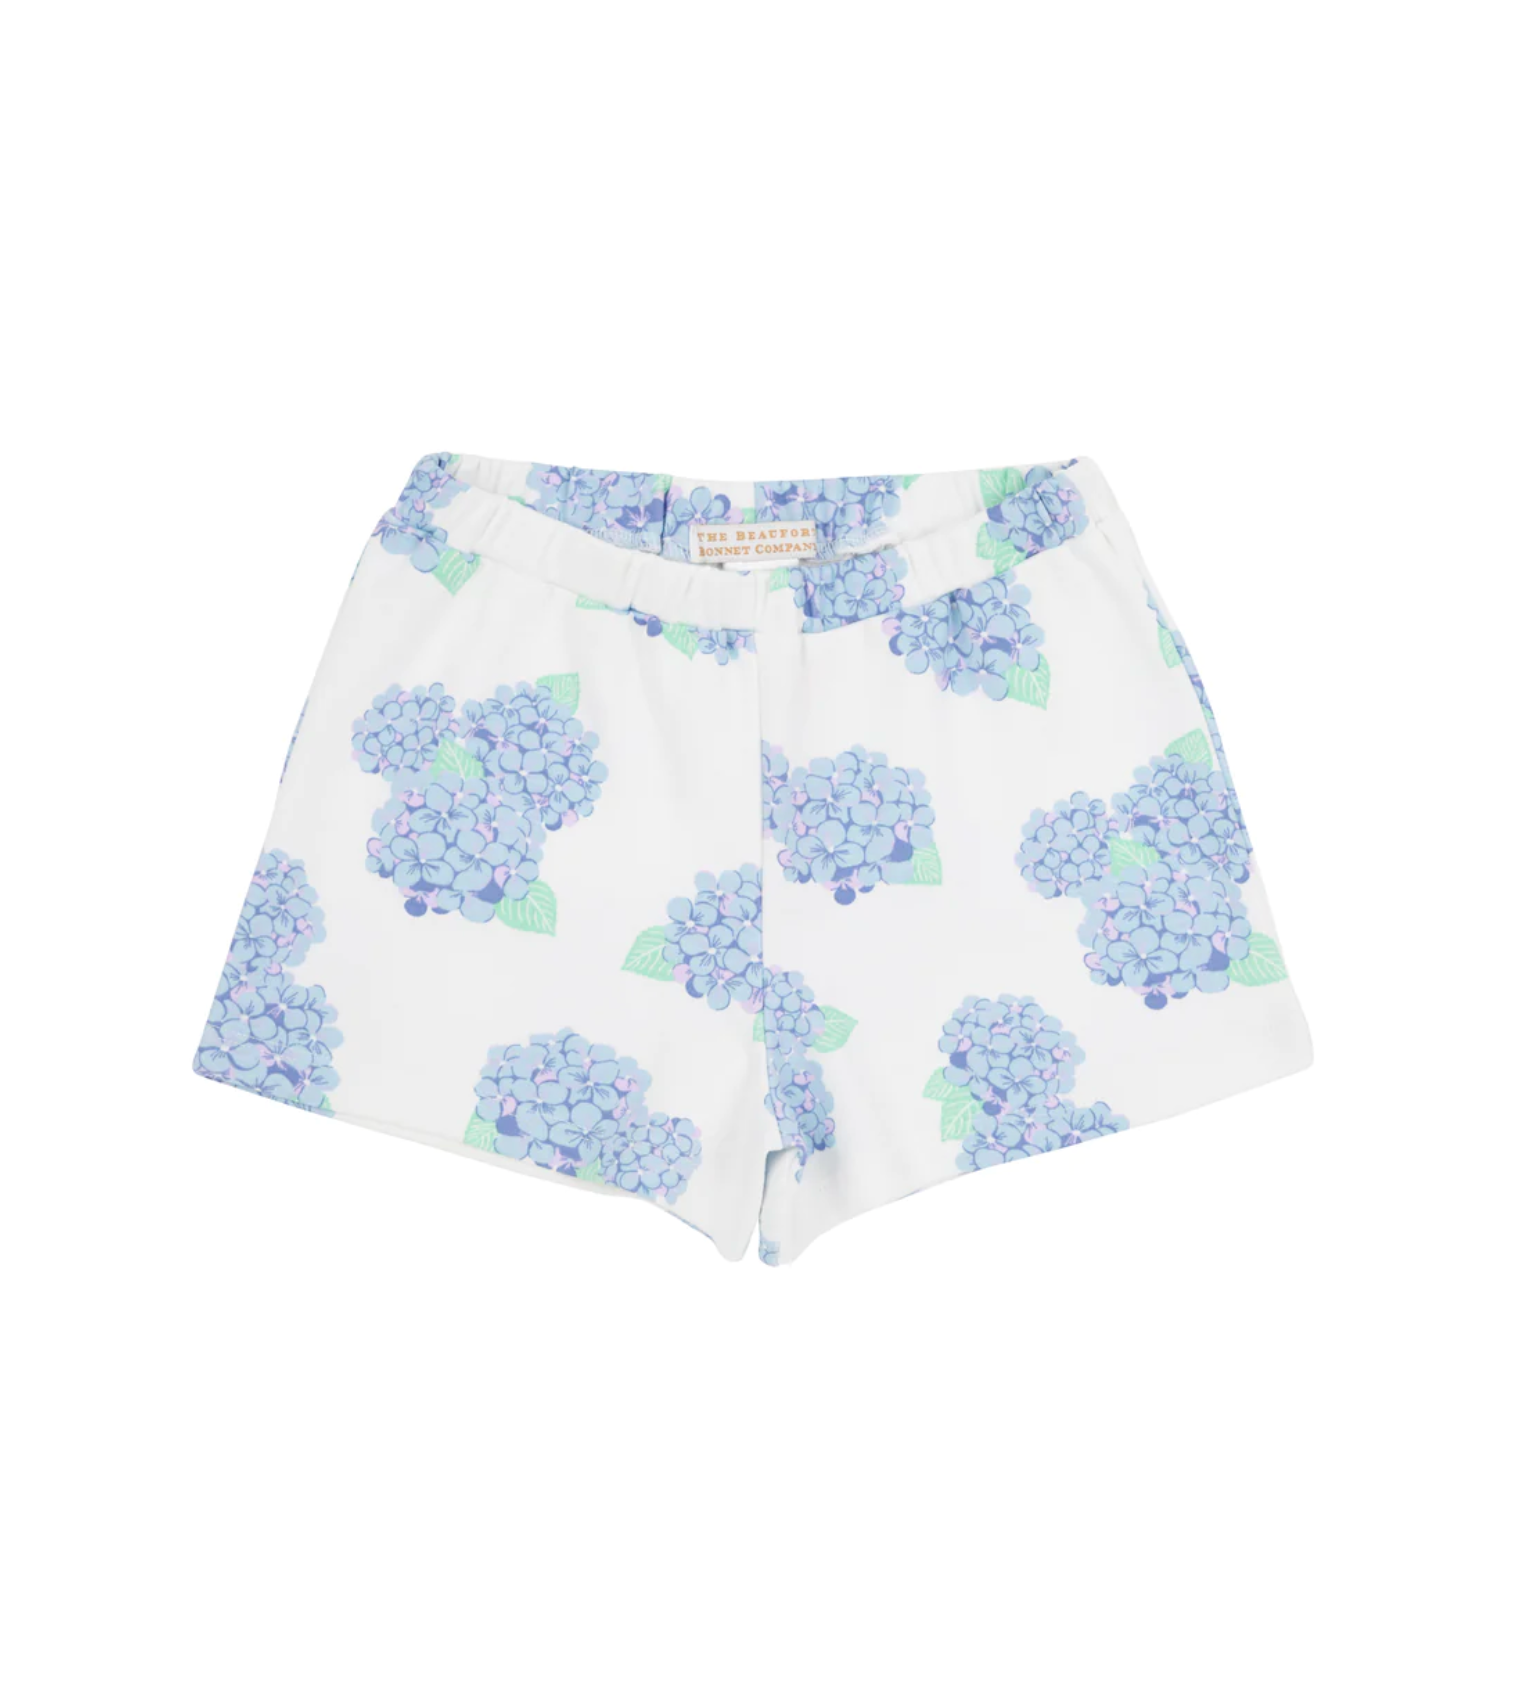 TBBC: Shipley Shorts - Happiest Hydrangeas